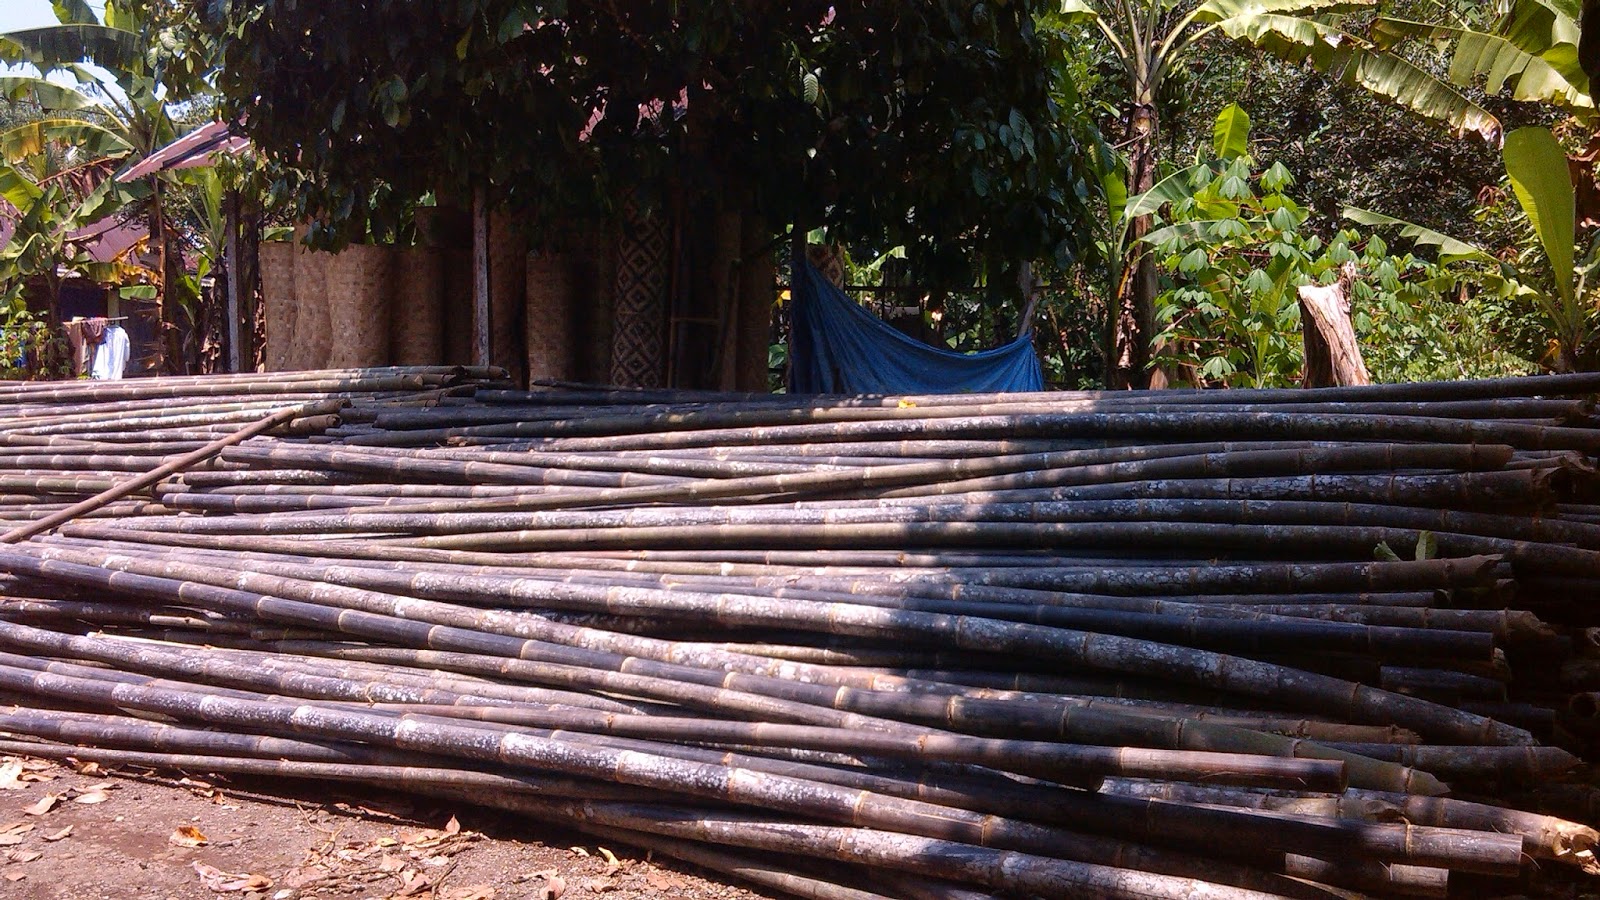  kerajinan  bahan keras bambu  Jangan diliat